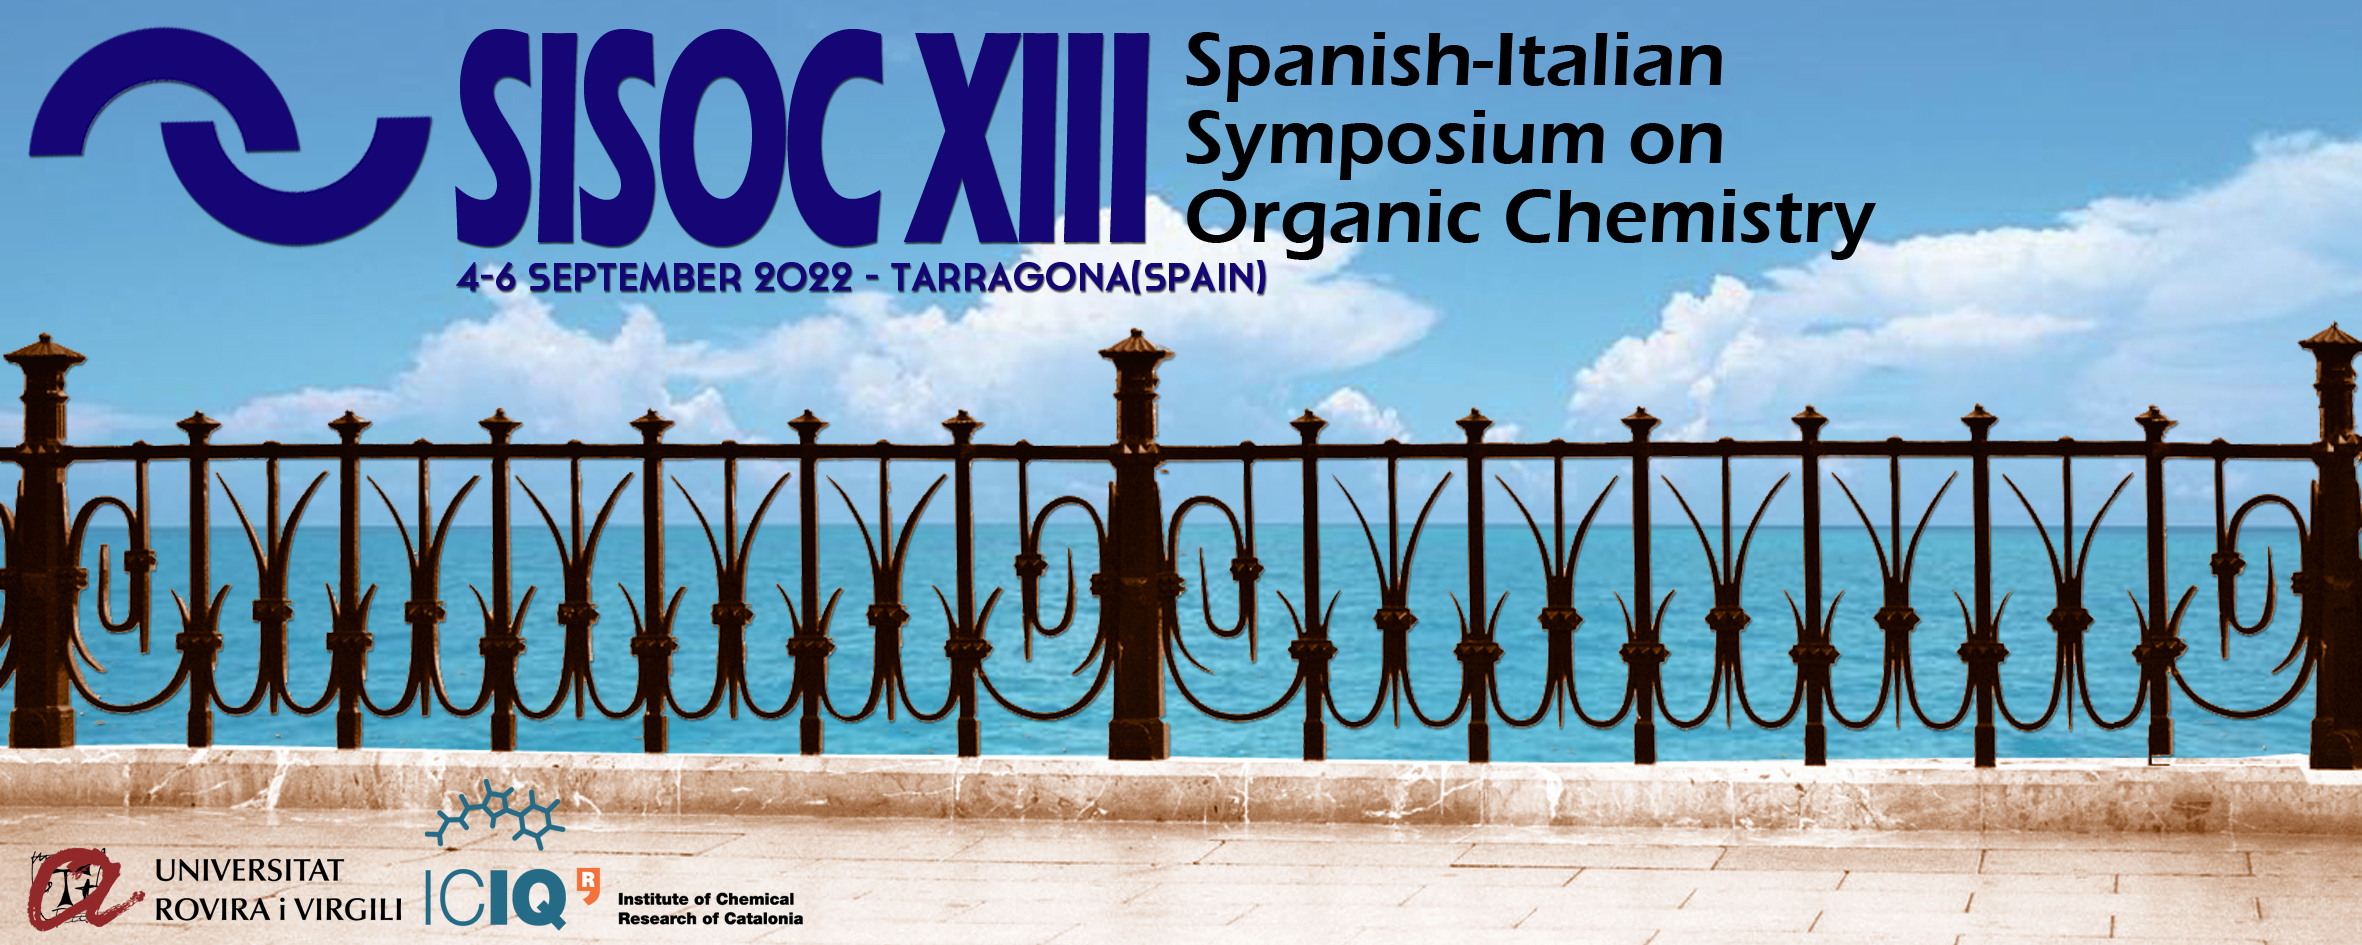 Spanish-Italian Symposium on Organic Chemistry - SISOC XIII